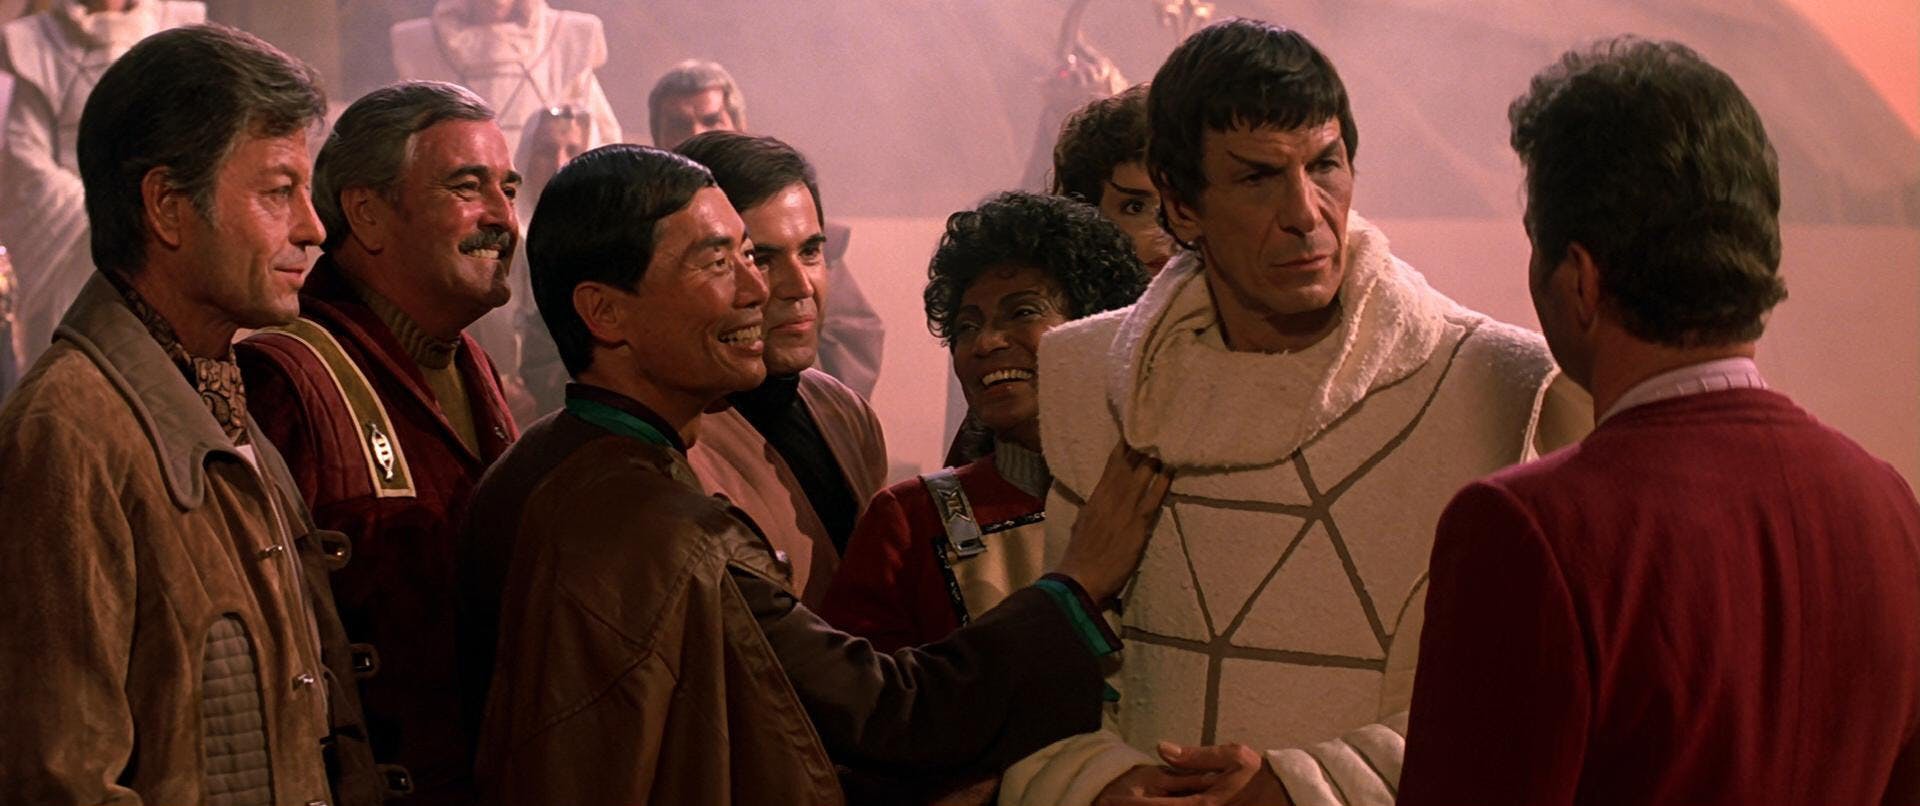 Enterprise crew welcomes Spock